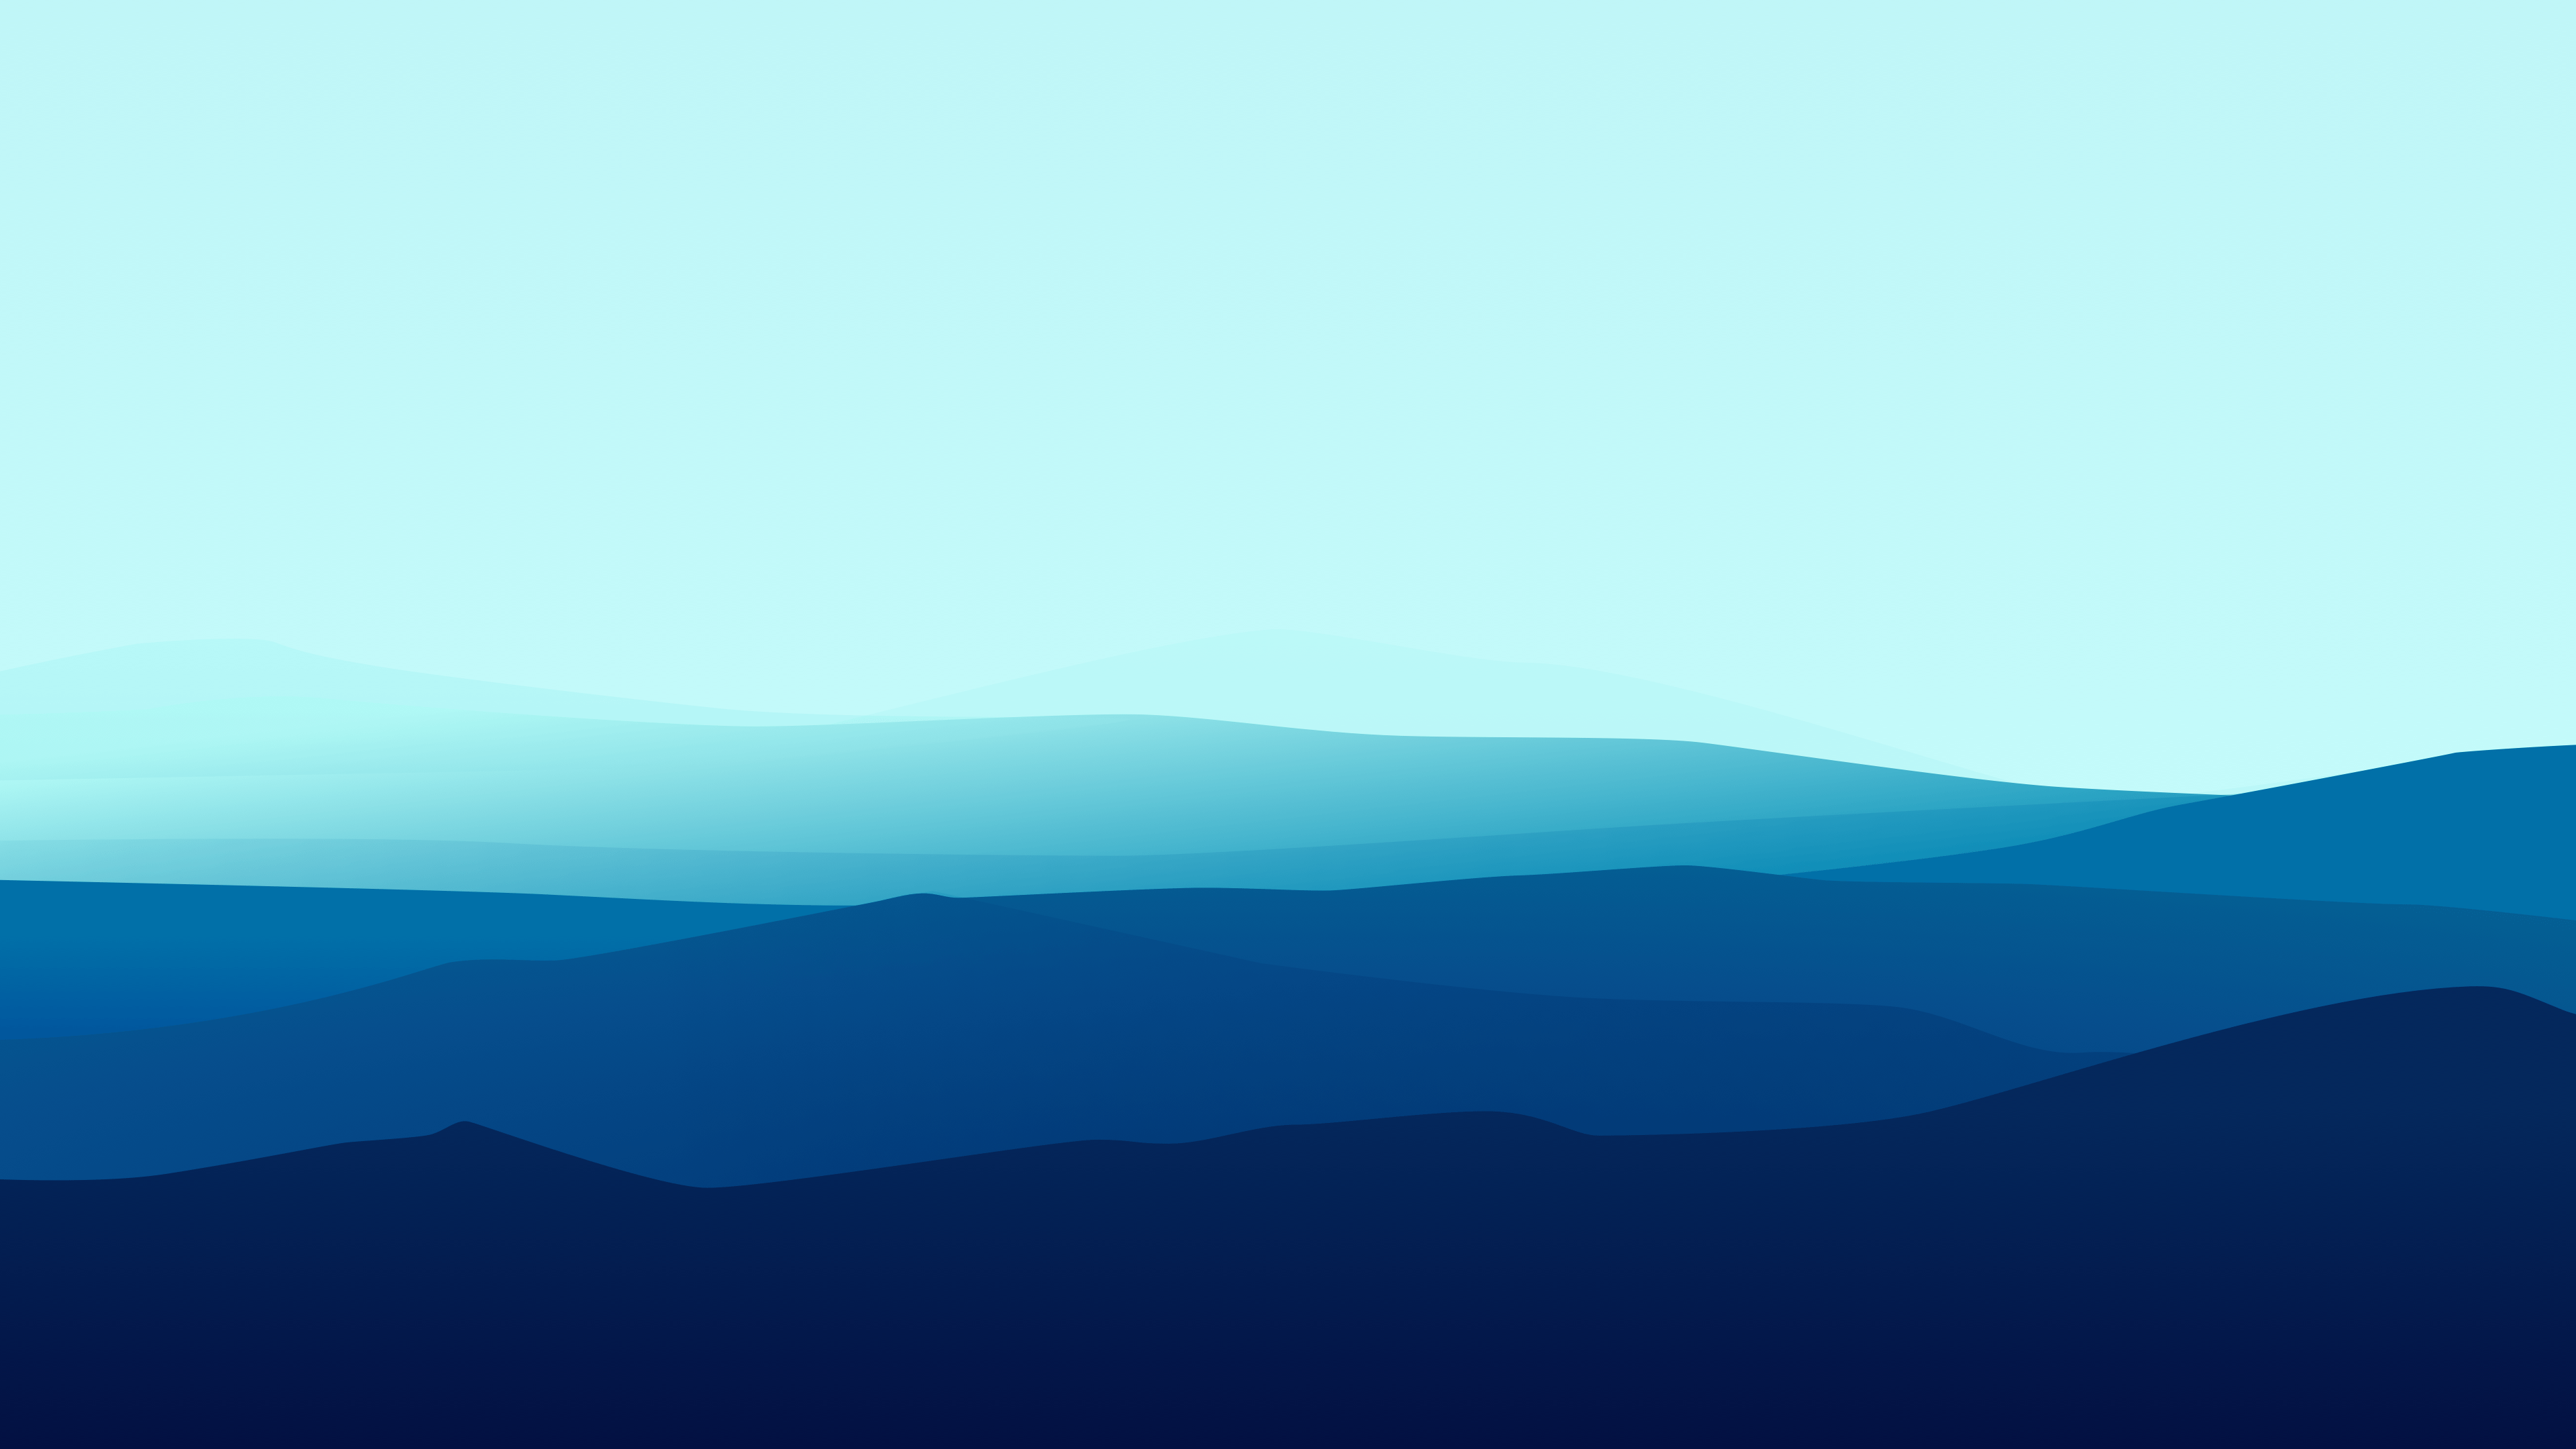 macbook wallpaper,blue,sky,nature,mountainous landforms,green